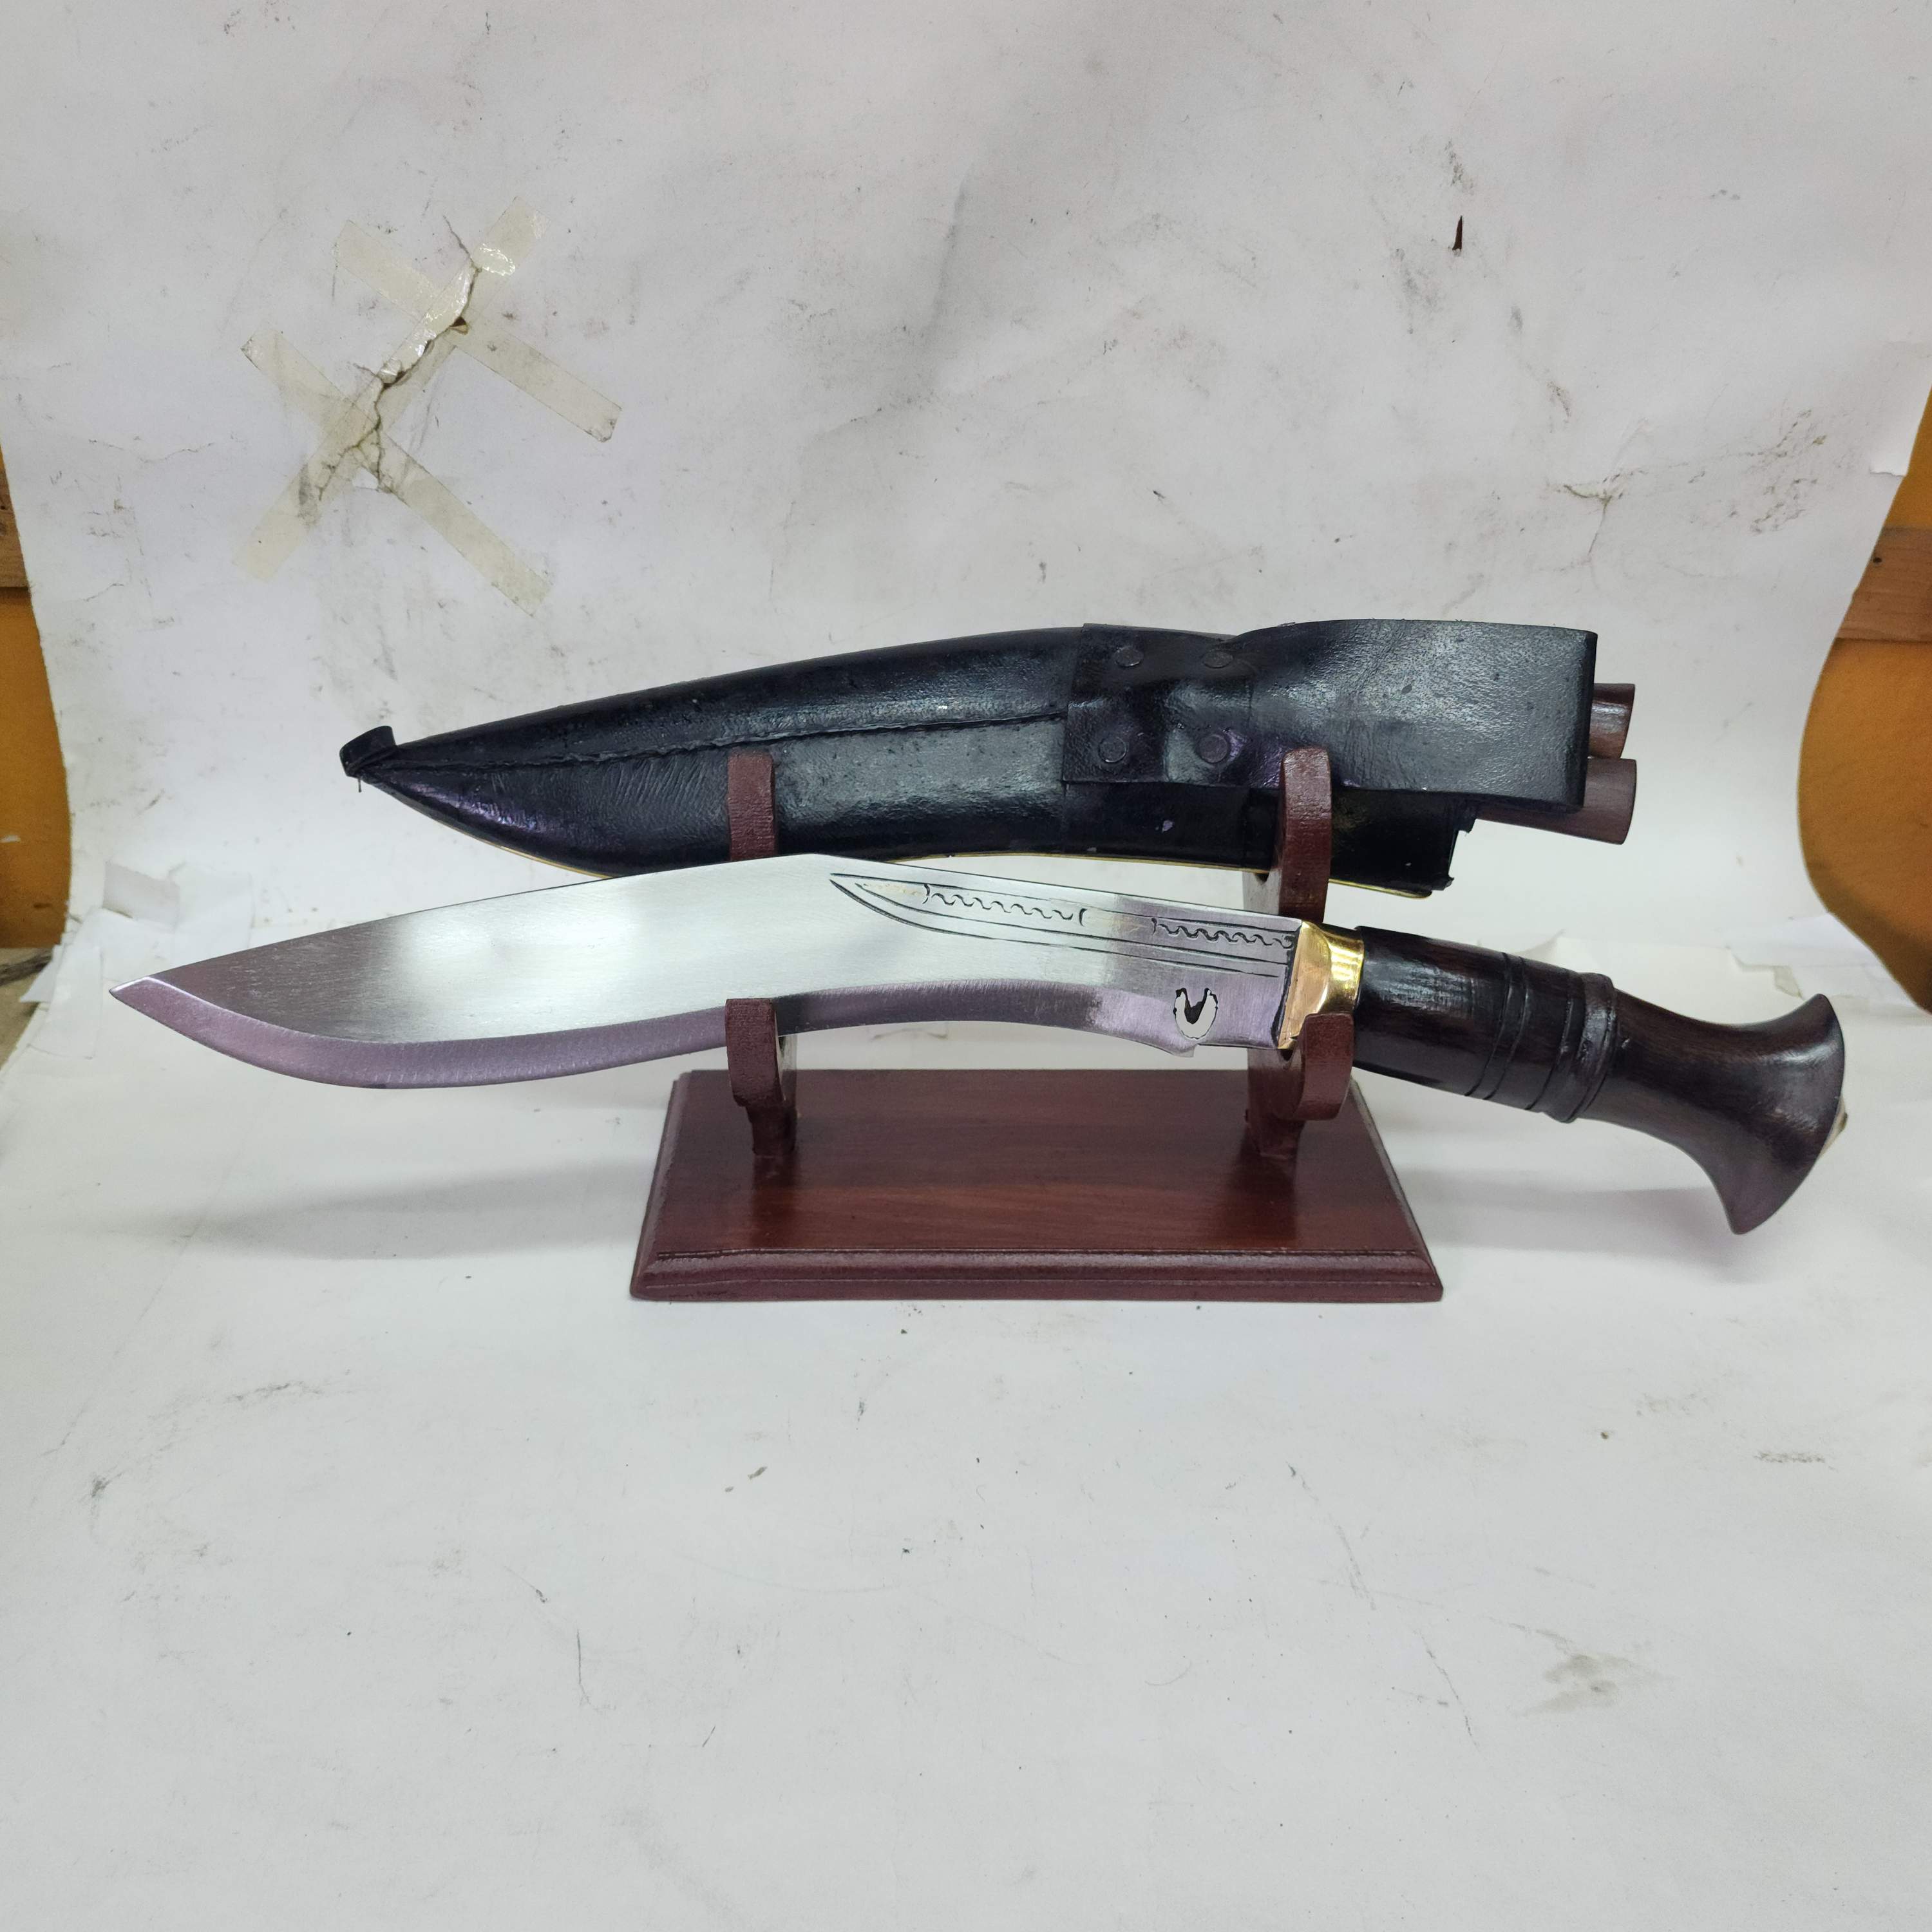 10 Inch, khukuri, Gurkha Knife With Leather Cover And Stand, Nepali Machete, stone Setting